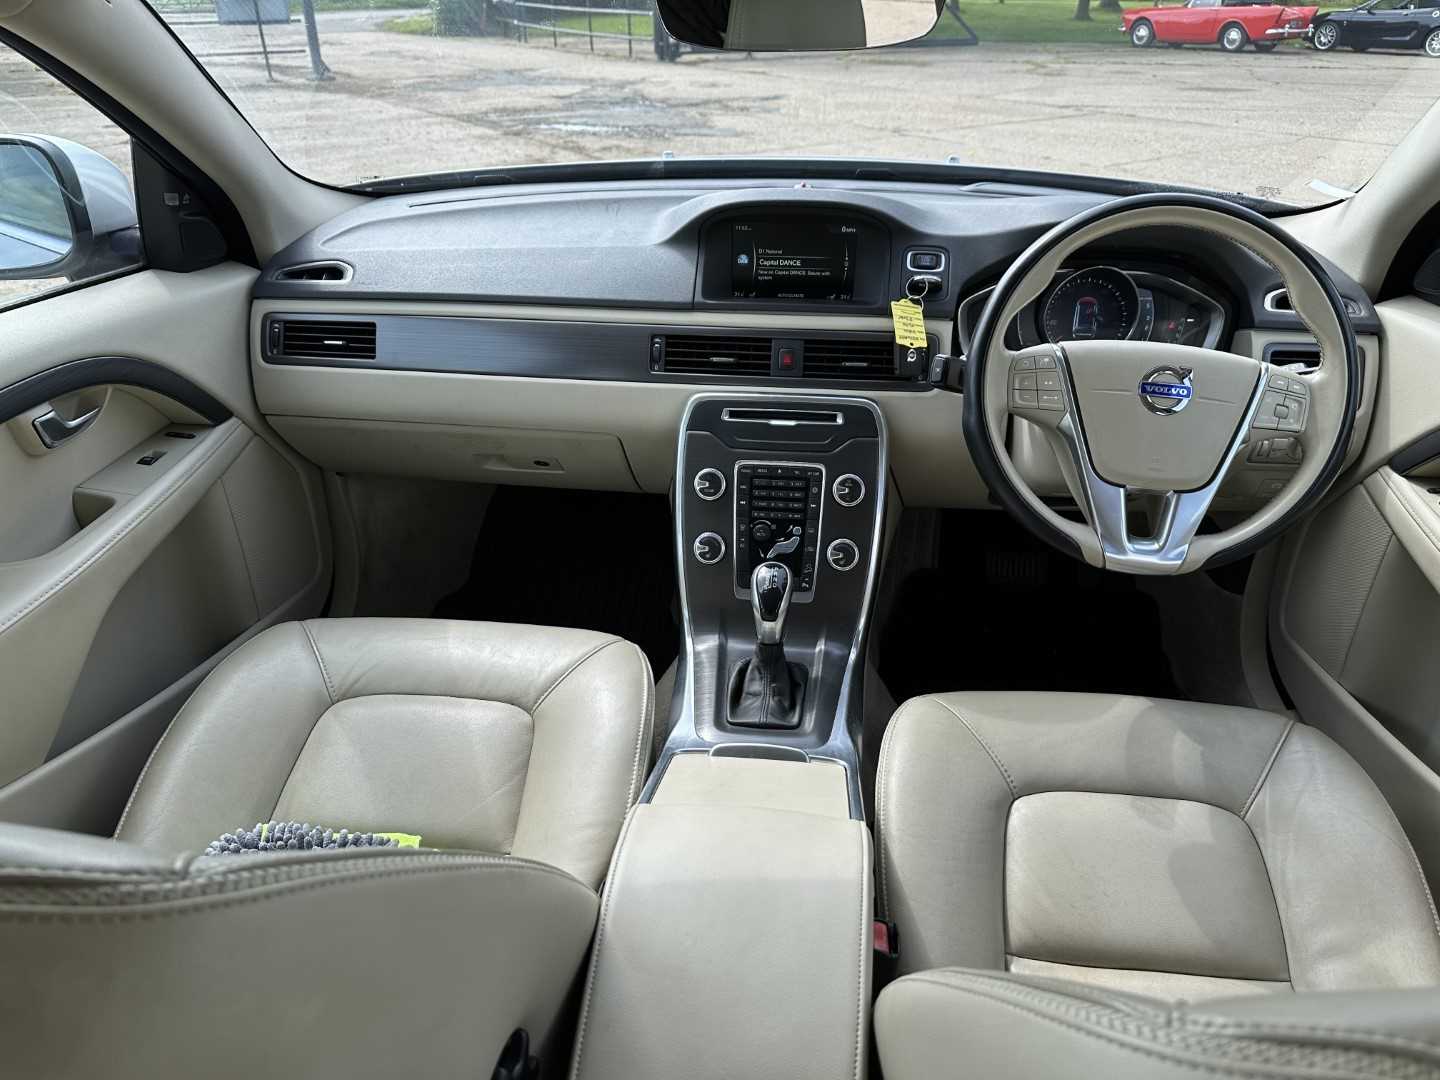 2014 Volvo XC70 SE Lux D5 AWD automatic, 5 door estate, reg. no. KS14 MFP - Image 26 of 29